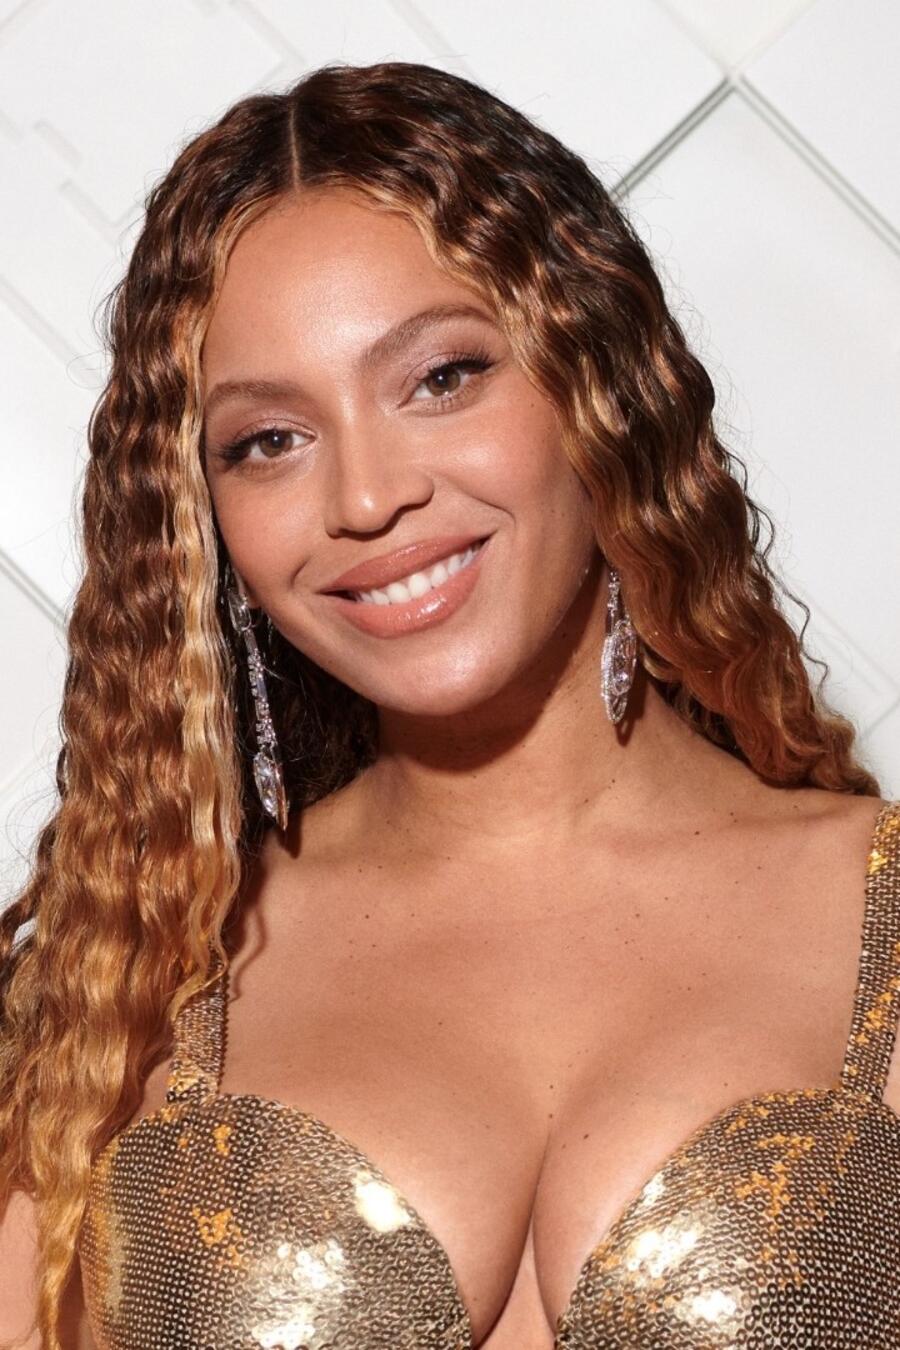 Beyoncé acude al Atlantis The Royal Grand Reveal Weekend, en Dubái, enero 2023.